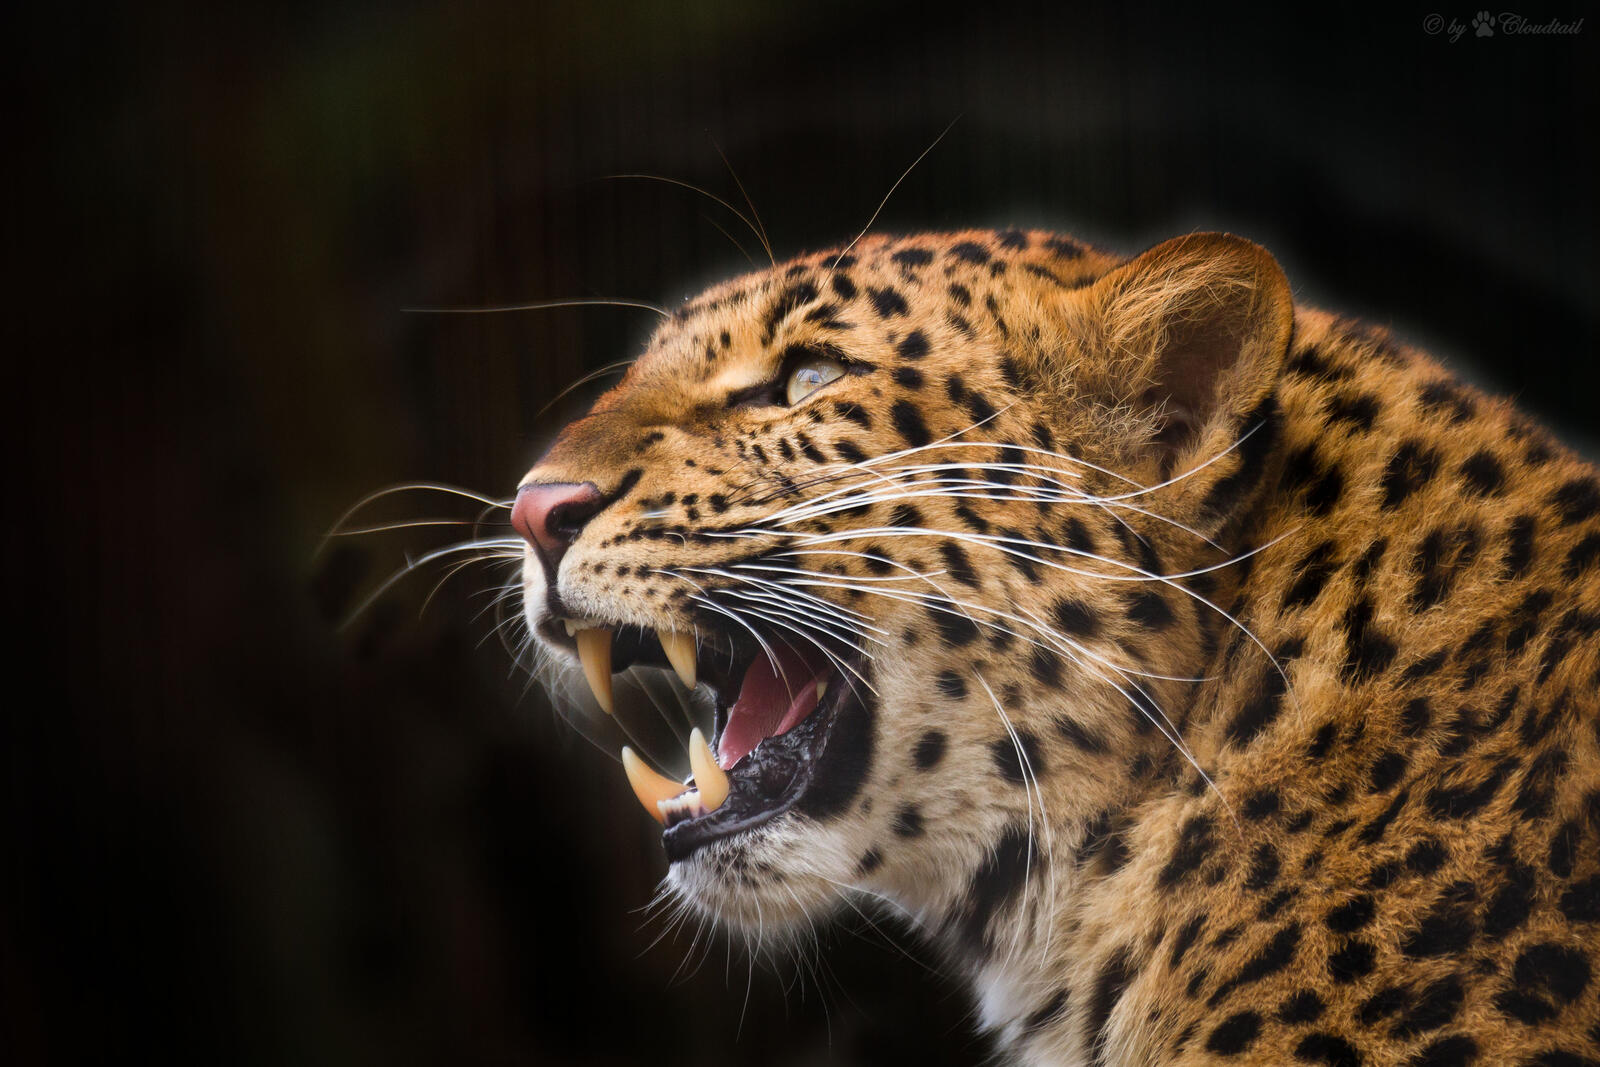 Wallpapers close-up Leopard portrait wild cat on the desktop